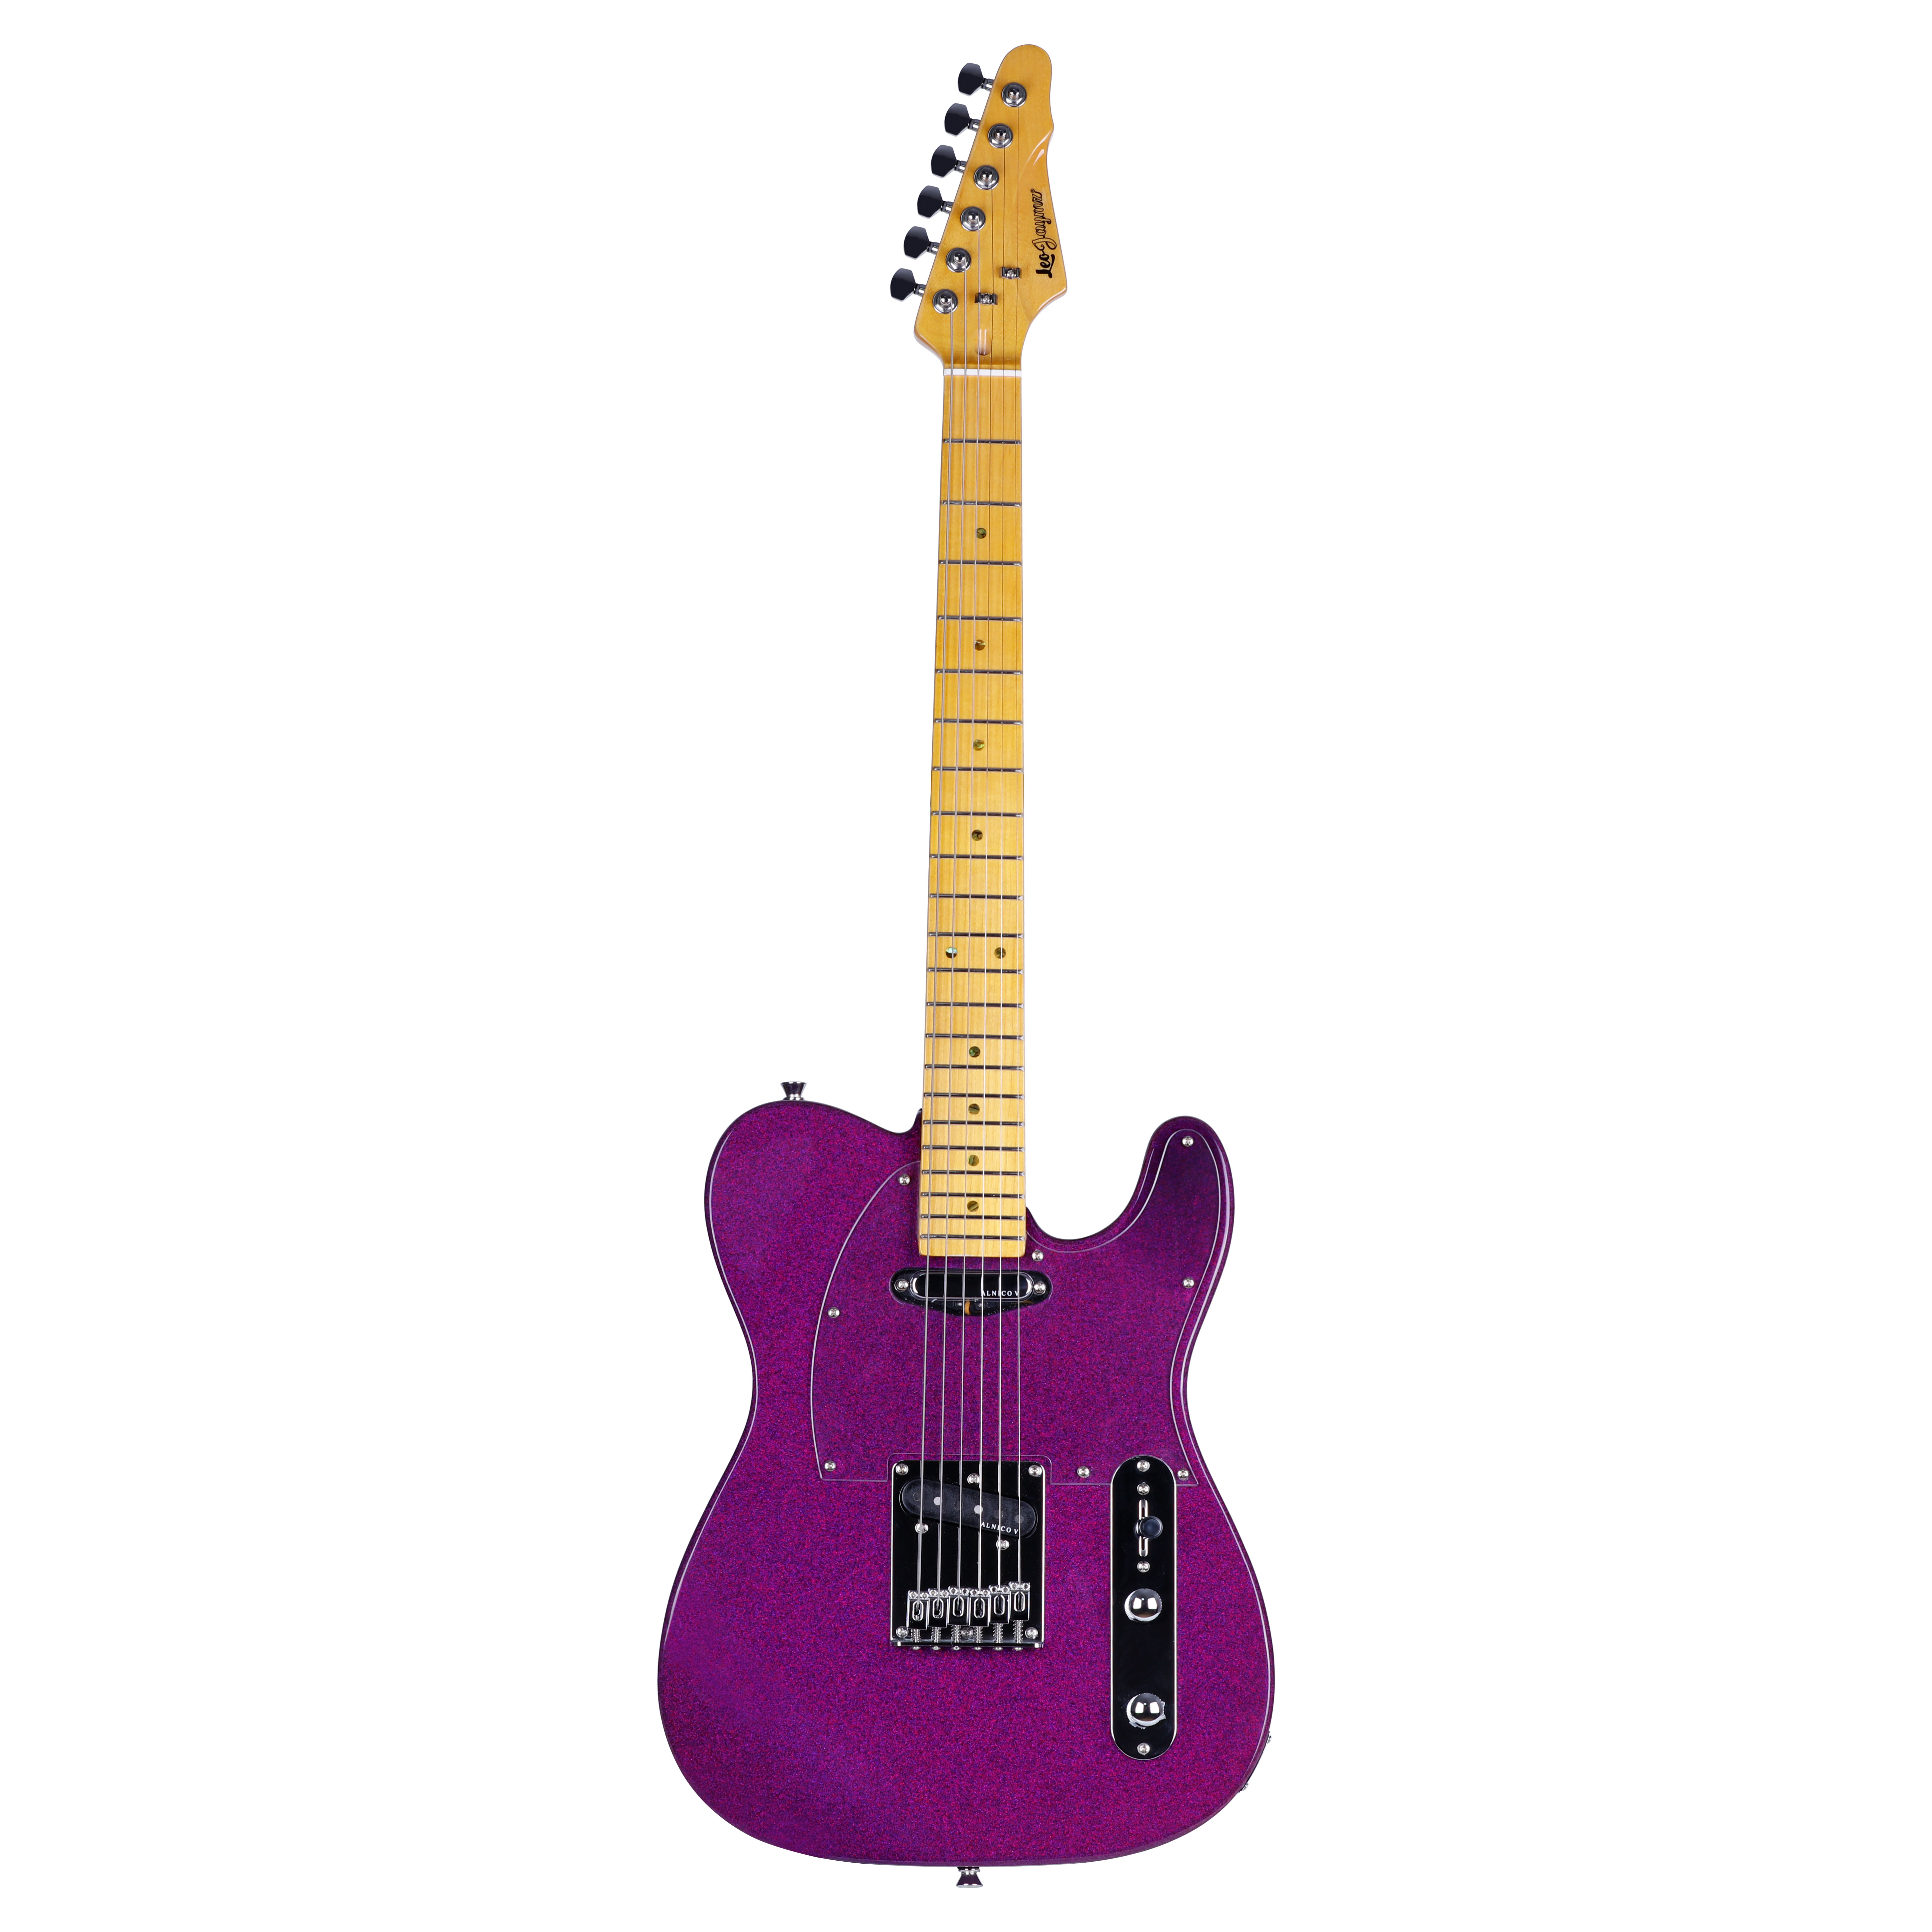 Leo Jaymz TL Style Electric Guitar - Mahogany Body，Maple Neck，High  Transparent Acrylic Pickguard - TE-100pro Alnico V Pickups - Beautiful  Glitter Pink